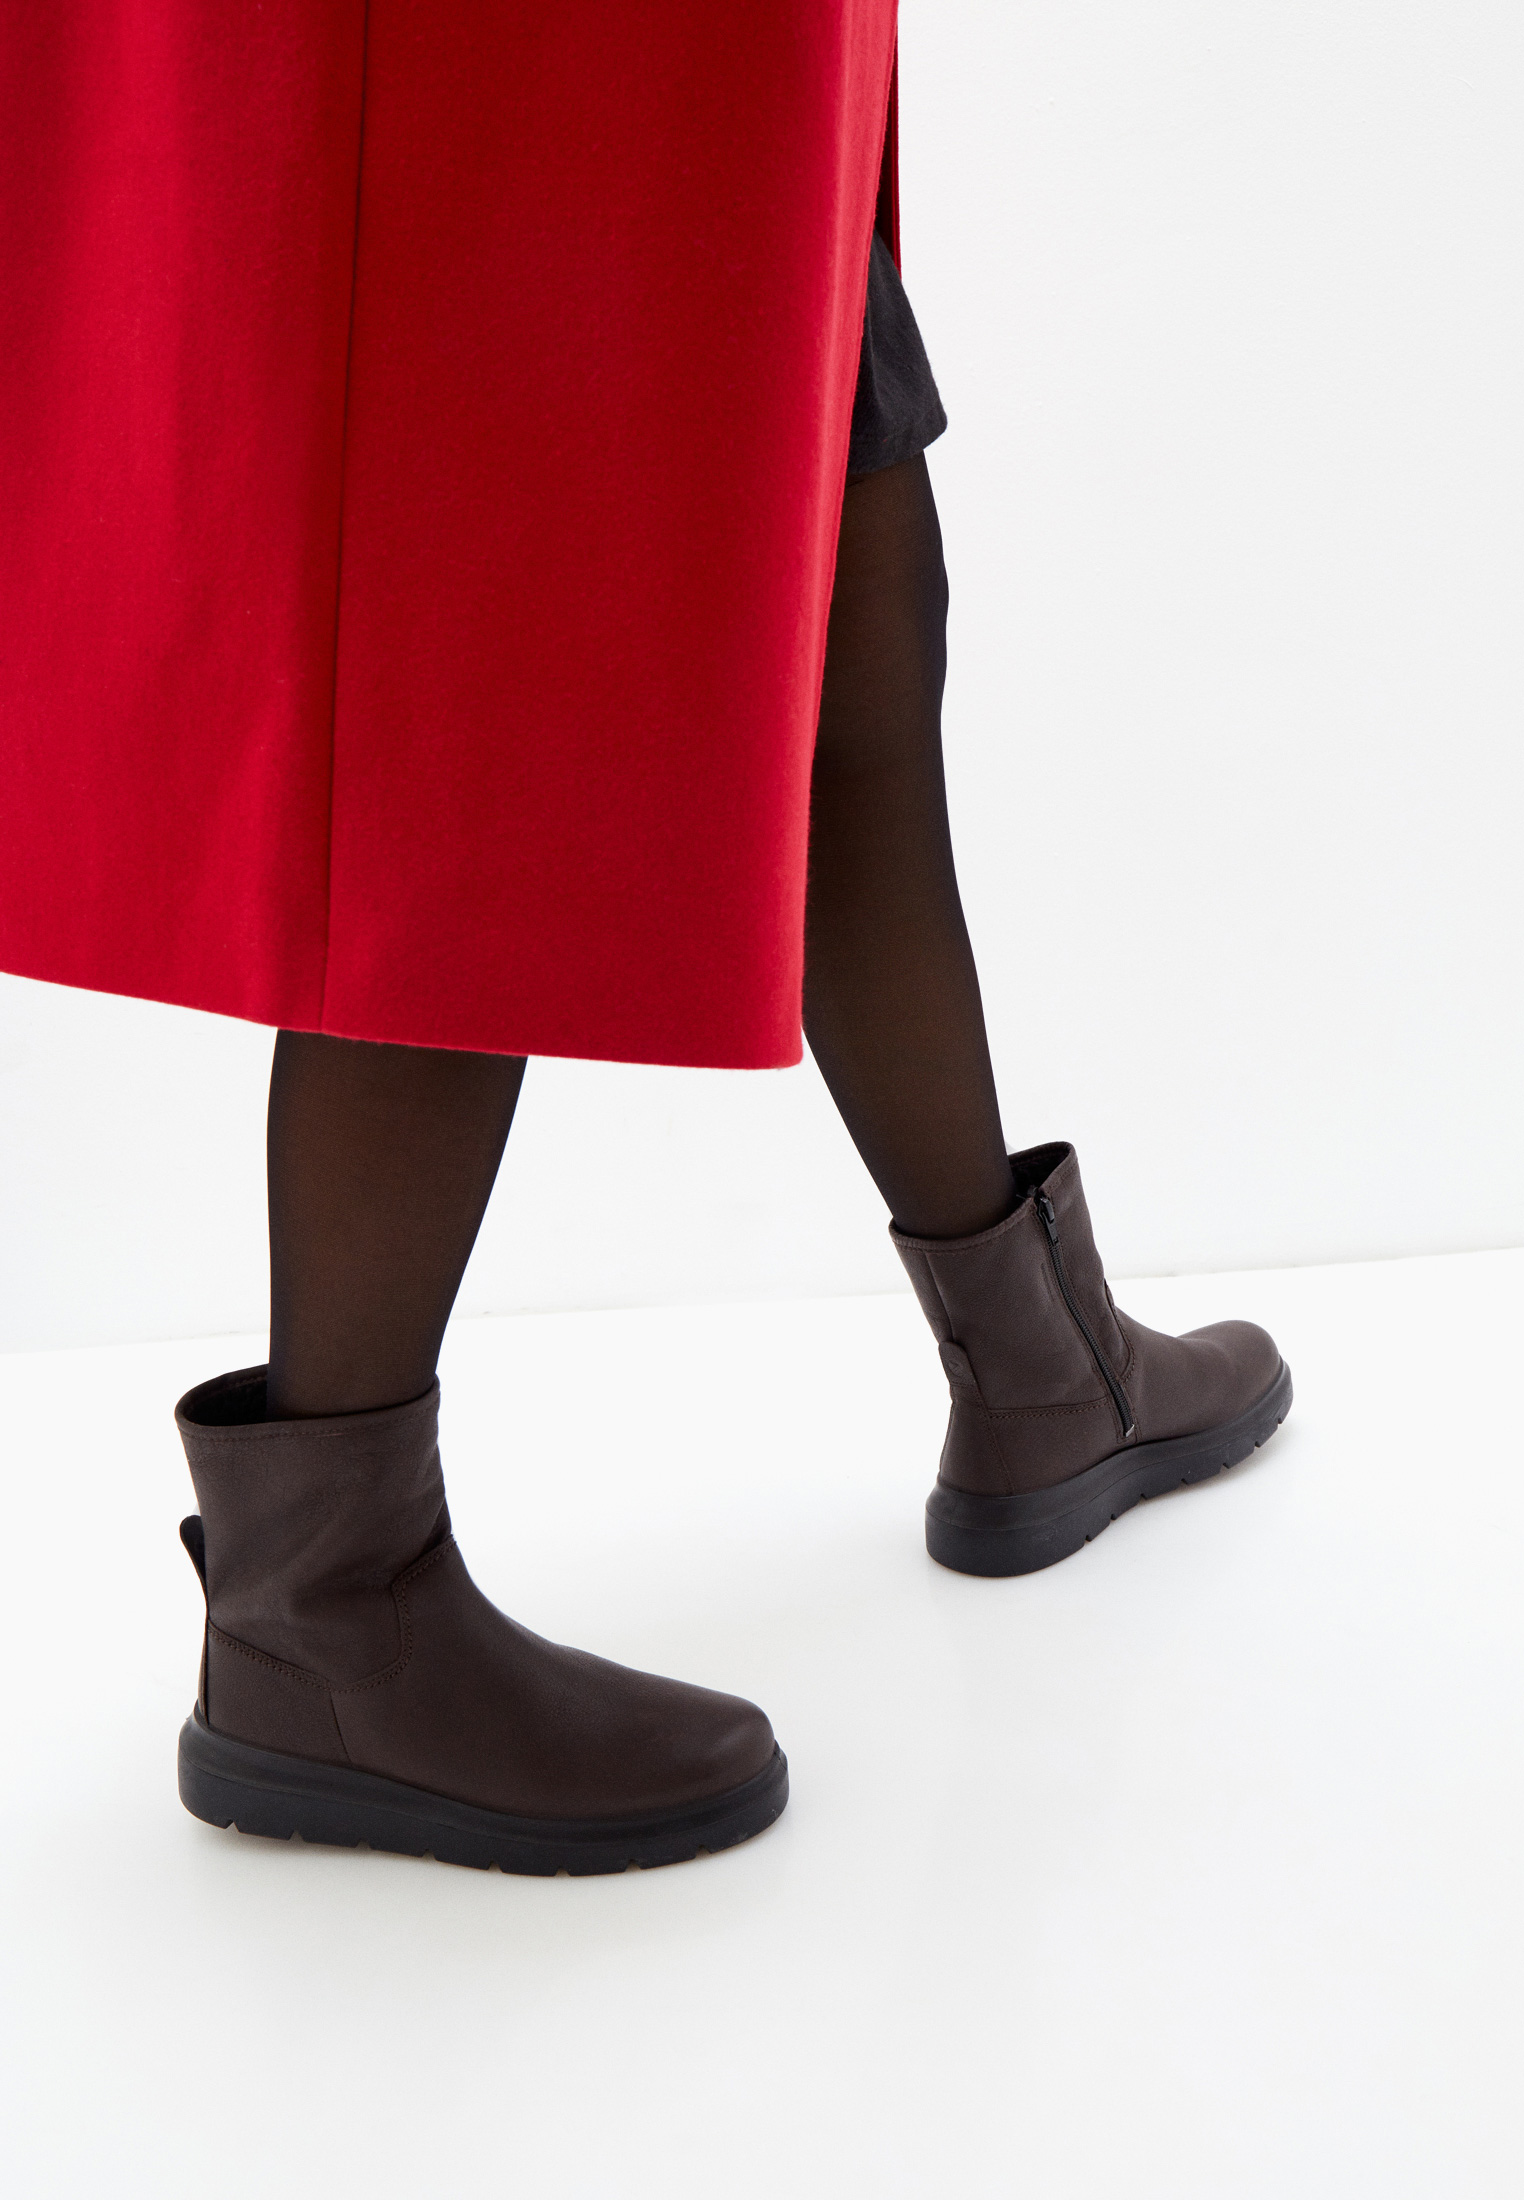 Ботинки Ecco NOUVELLE, цвет: коричневый, MP002XW0KSHU — купить винтернет-магазине Lamoda